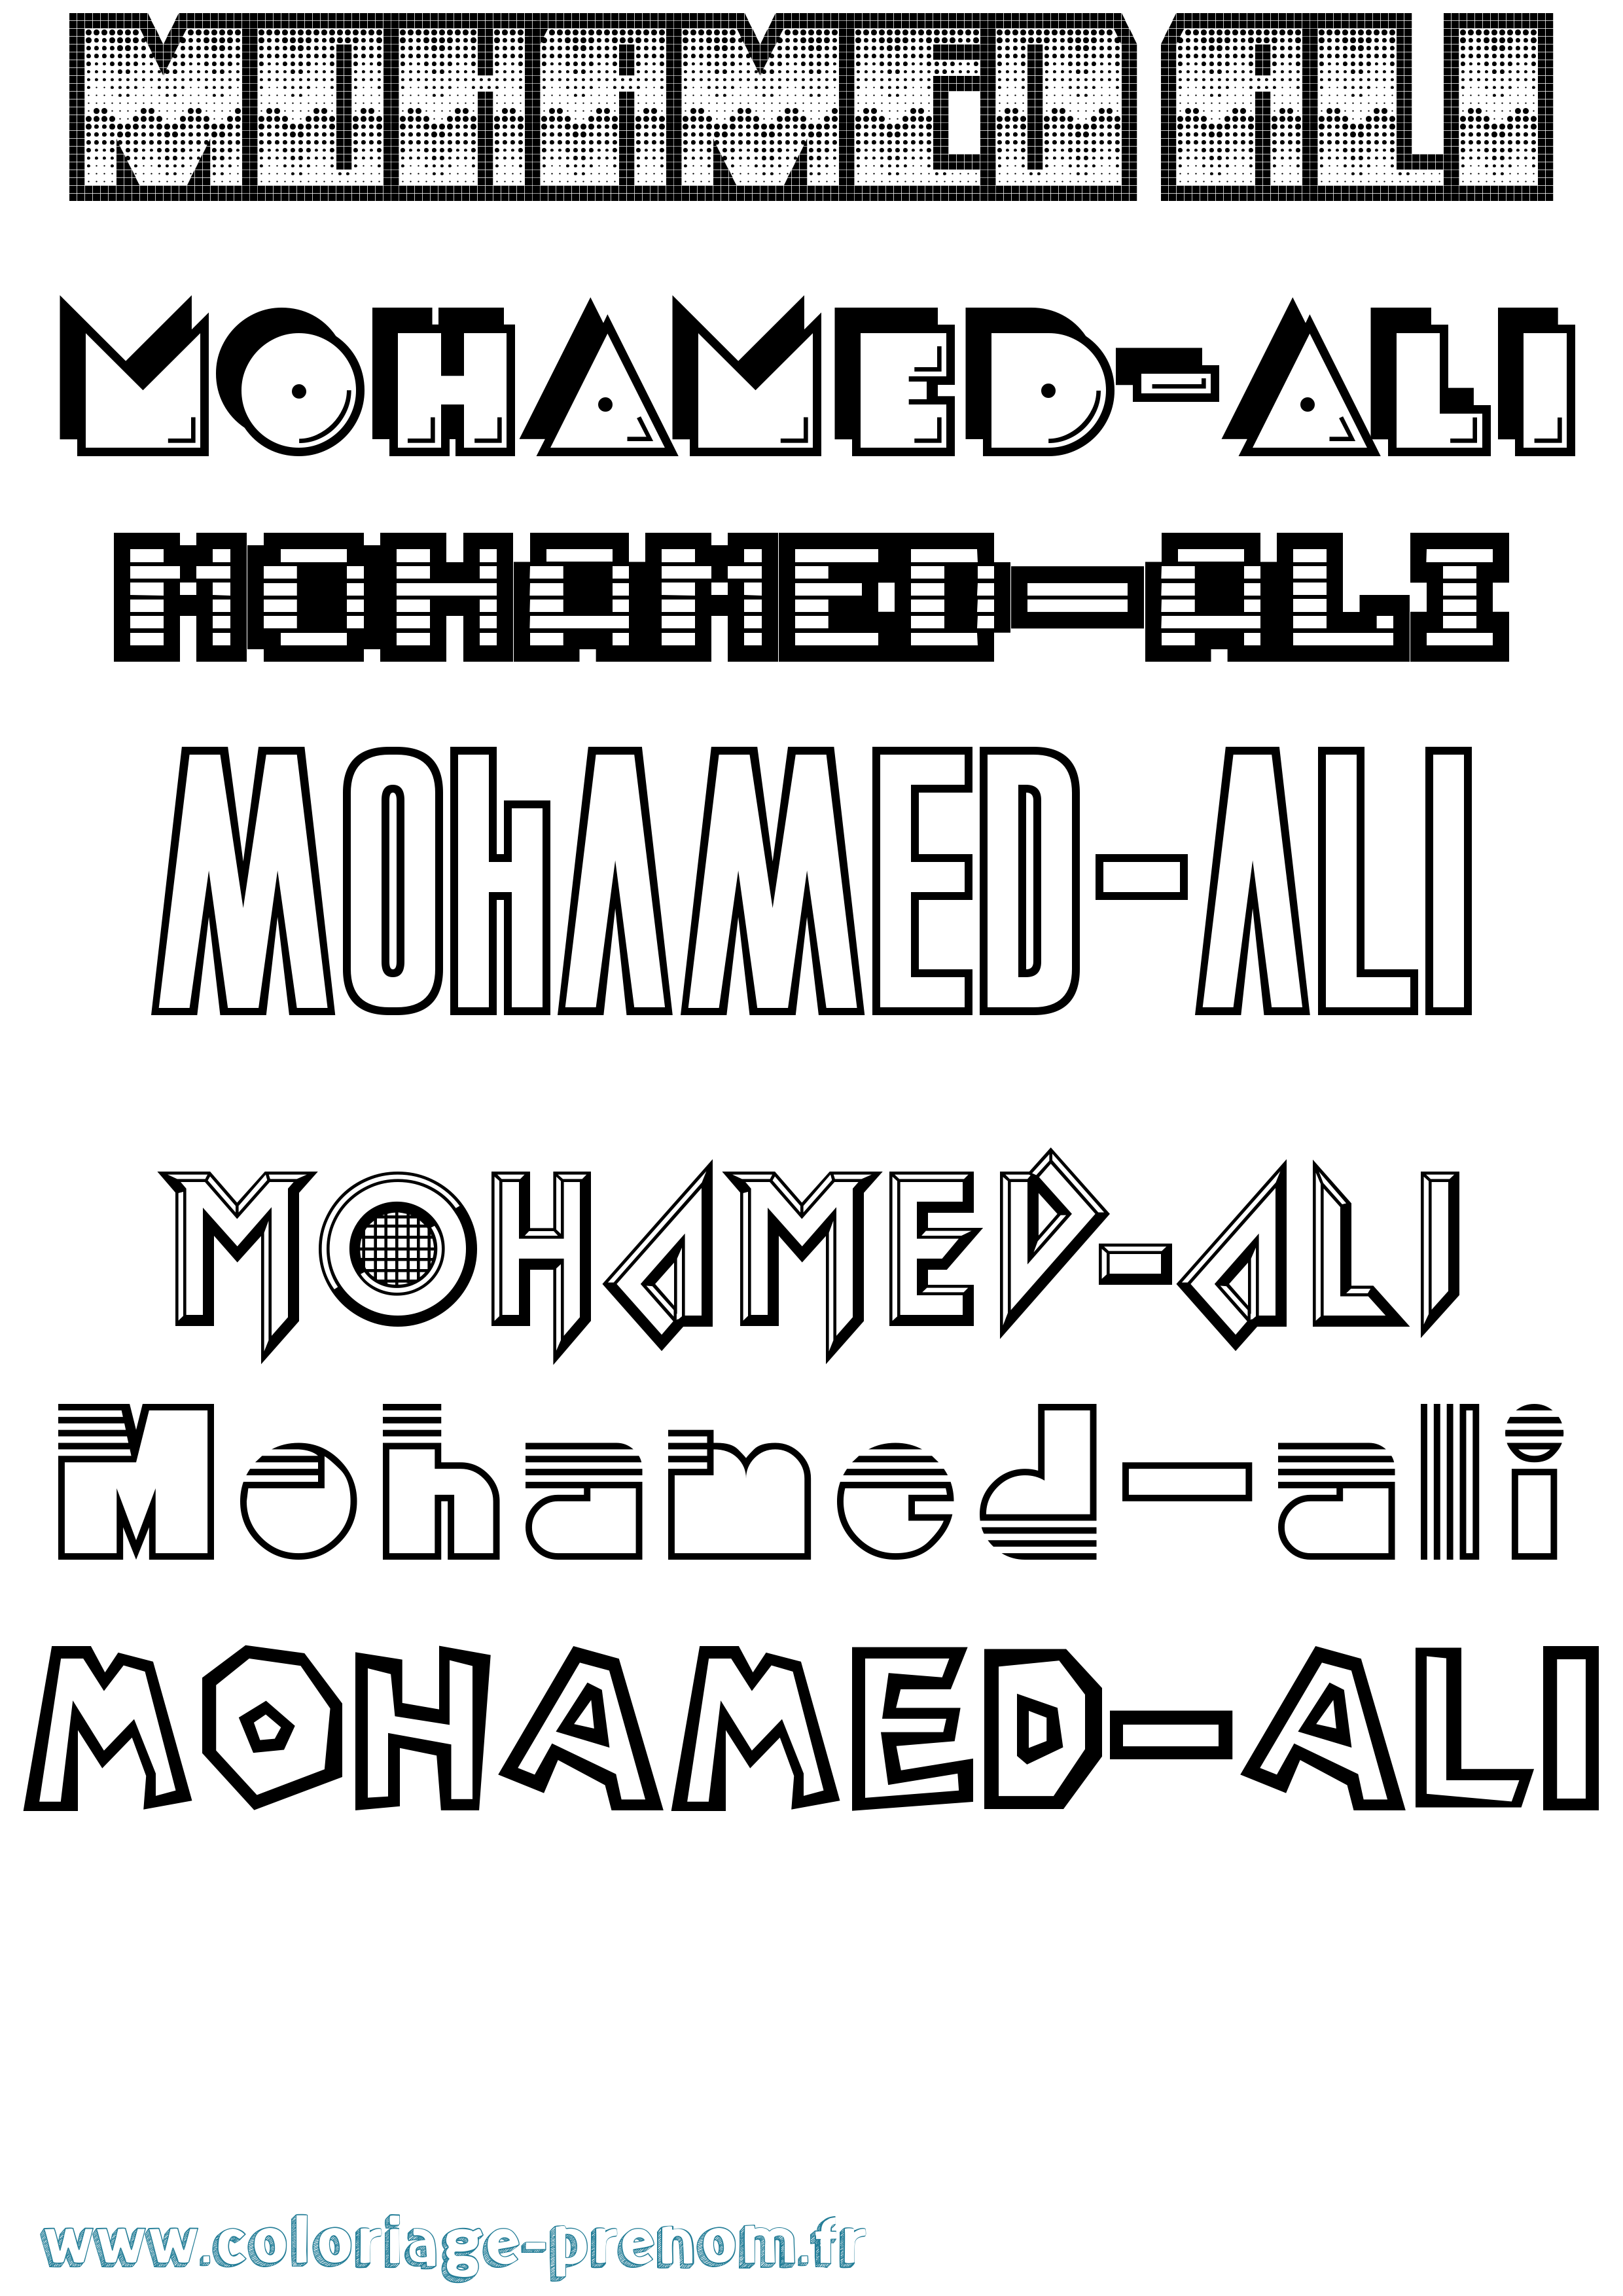 Coloriage prénom Mohamed-Ali